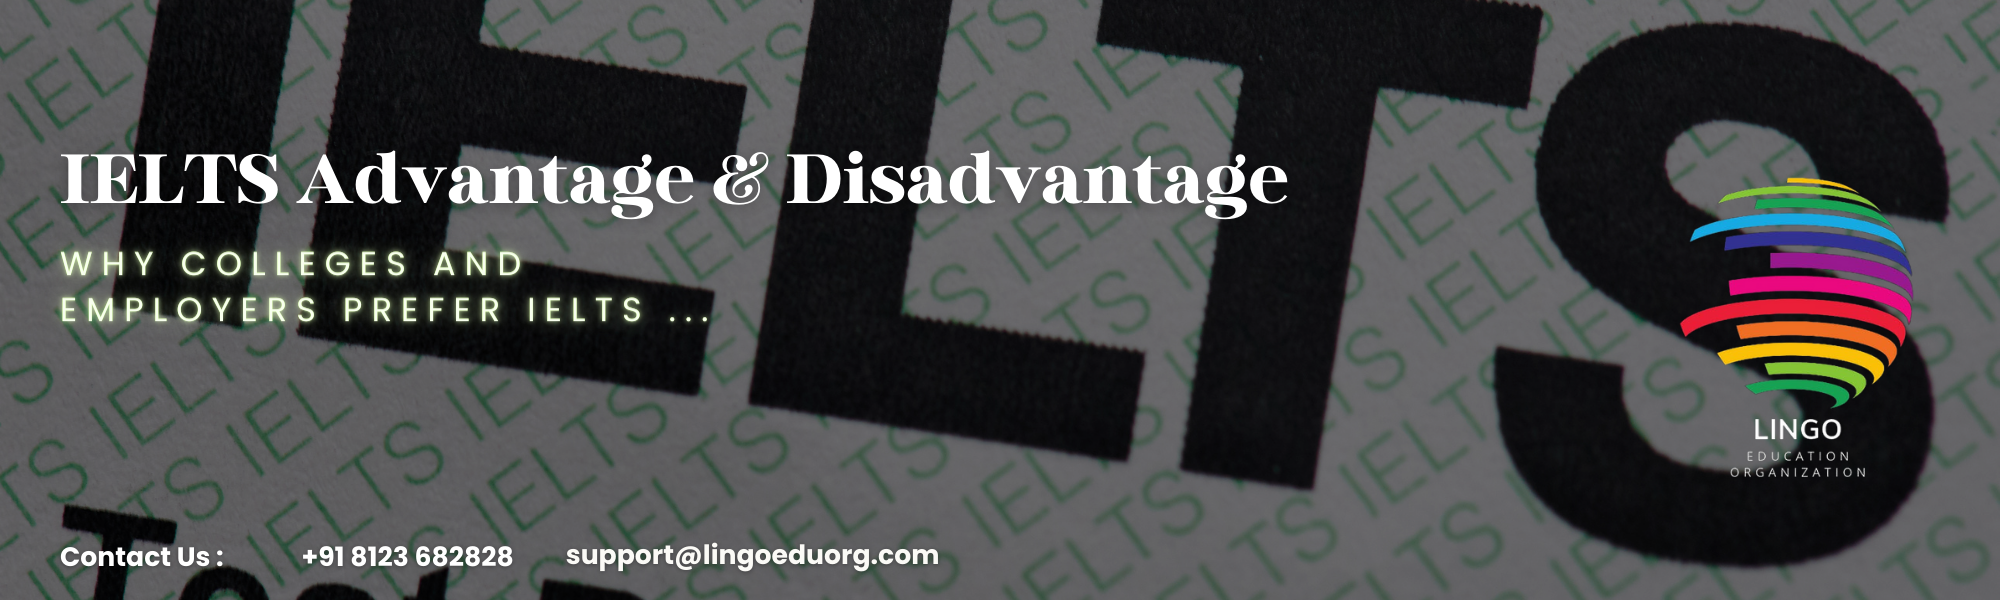 IELTS Advantage & Disadvantage
